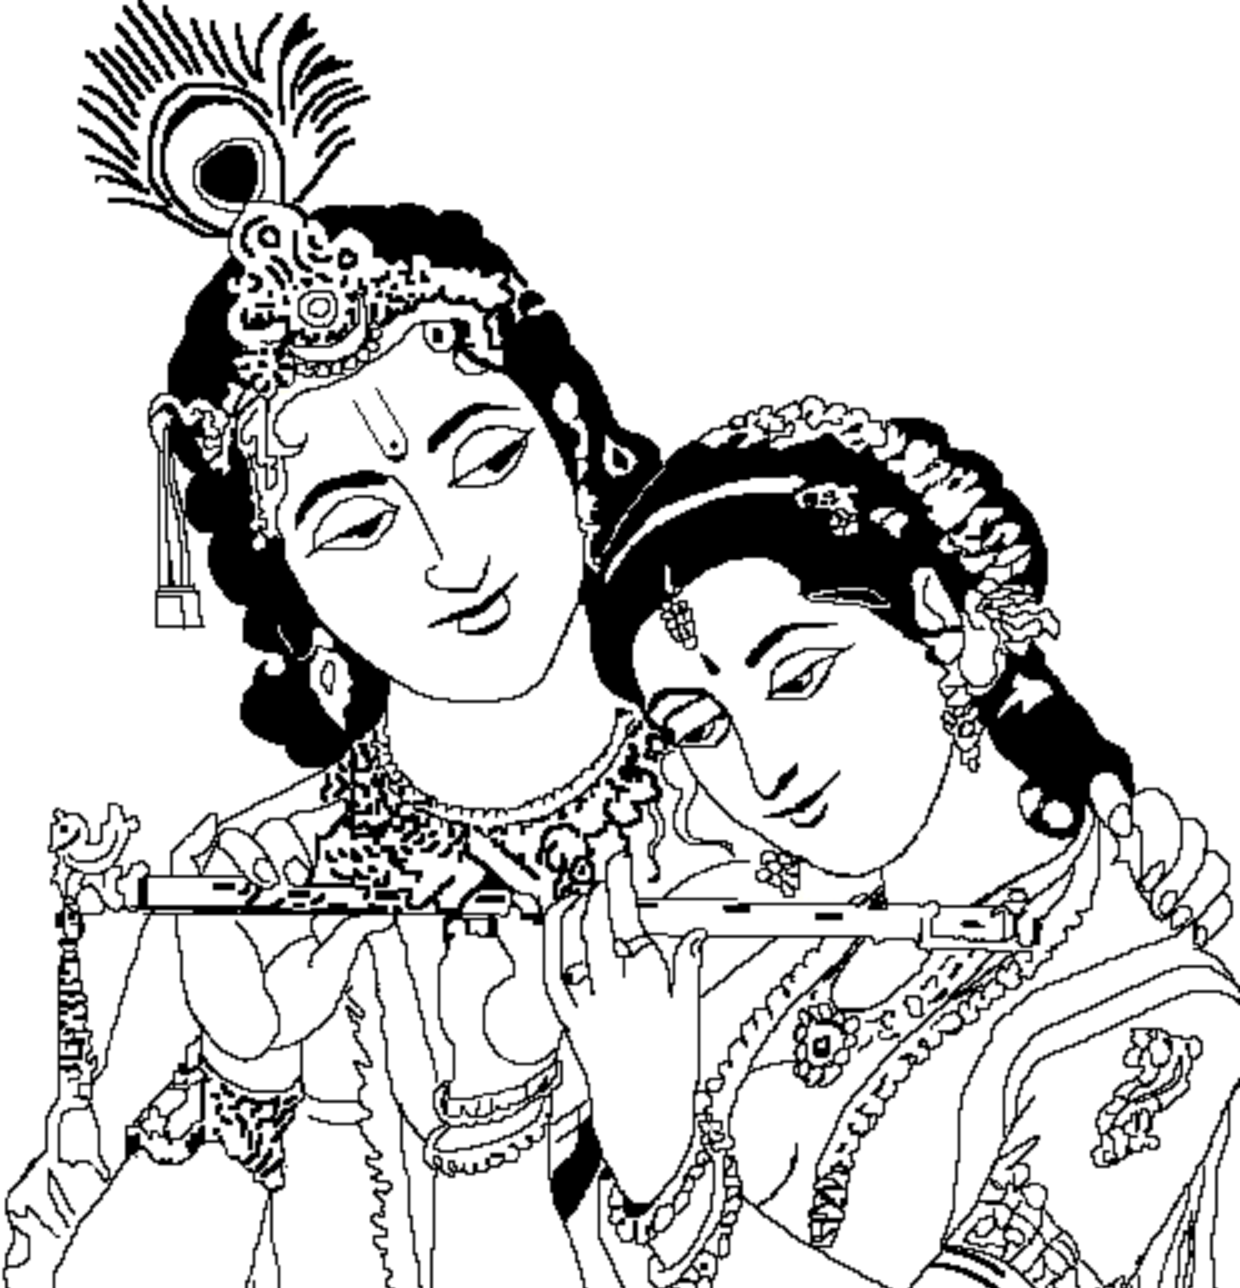 Radha Krishna drawing , hope you all like it.💖 : r/IncredibleIndia